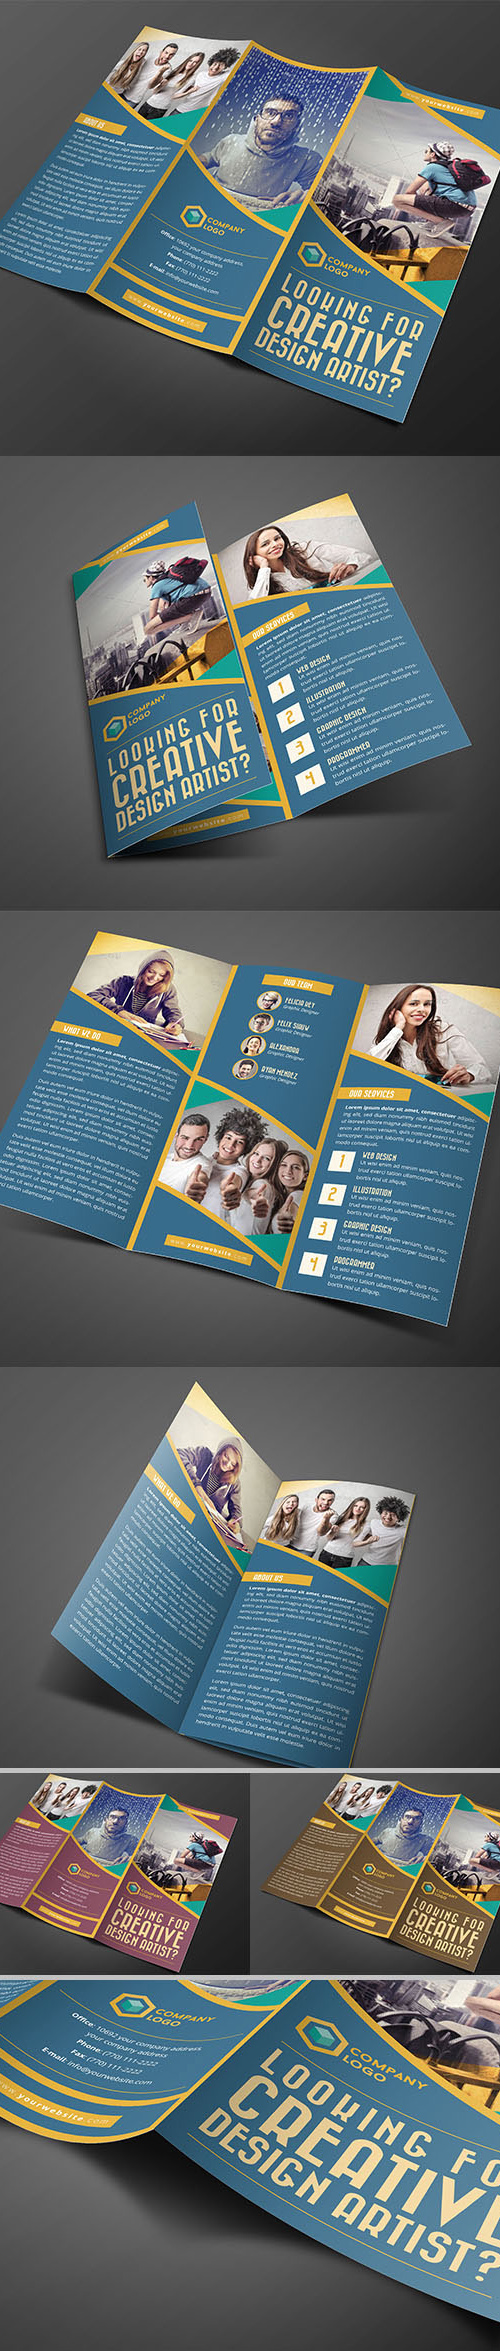 Creative Design Agency Trifold Brochure